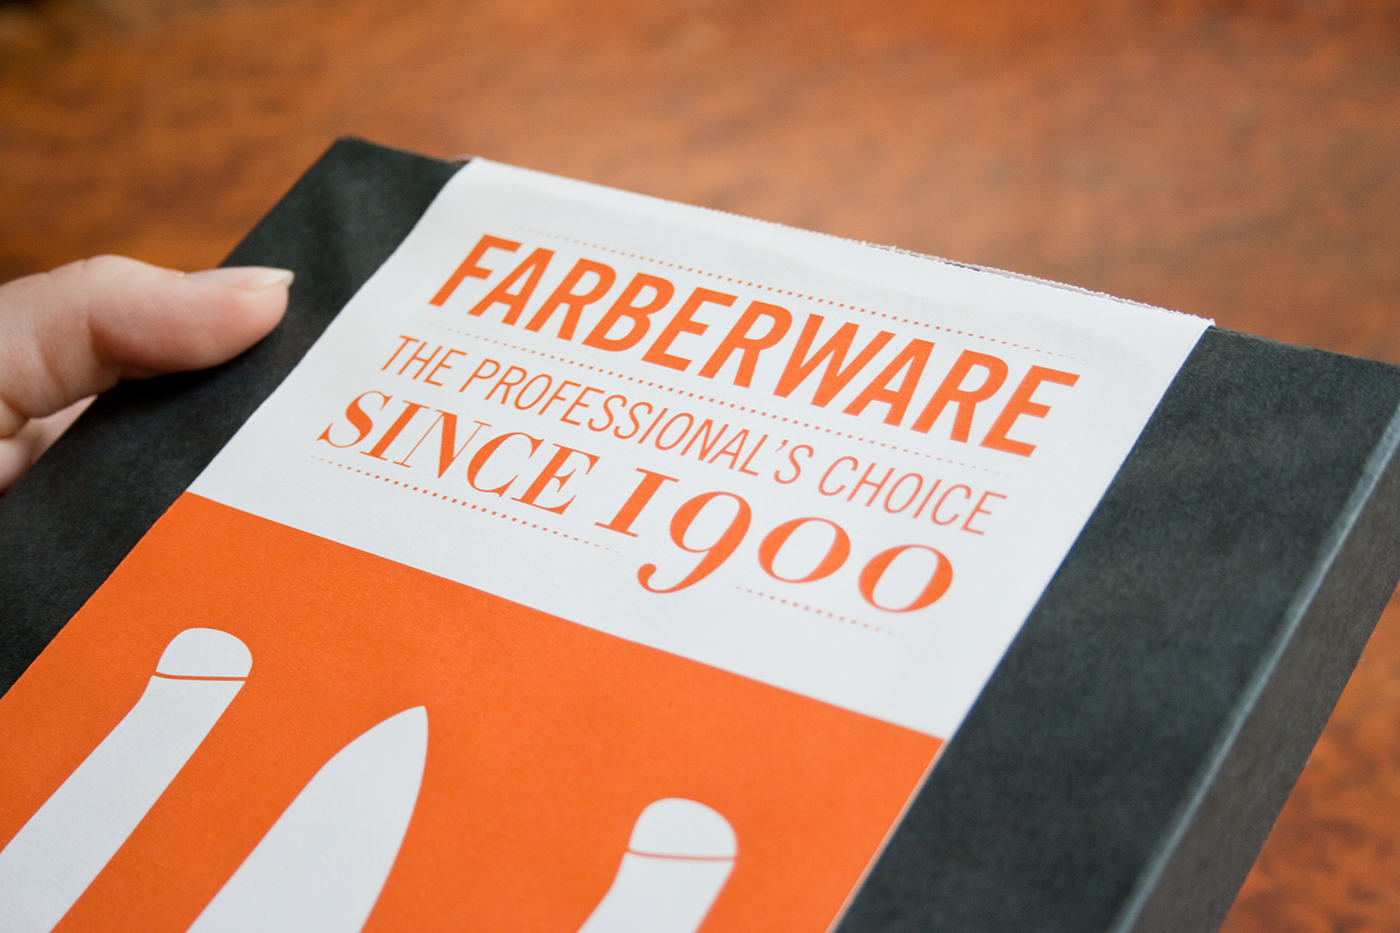 Farberware knives Packaging knife set orange